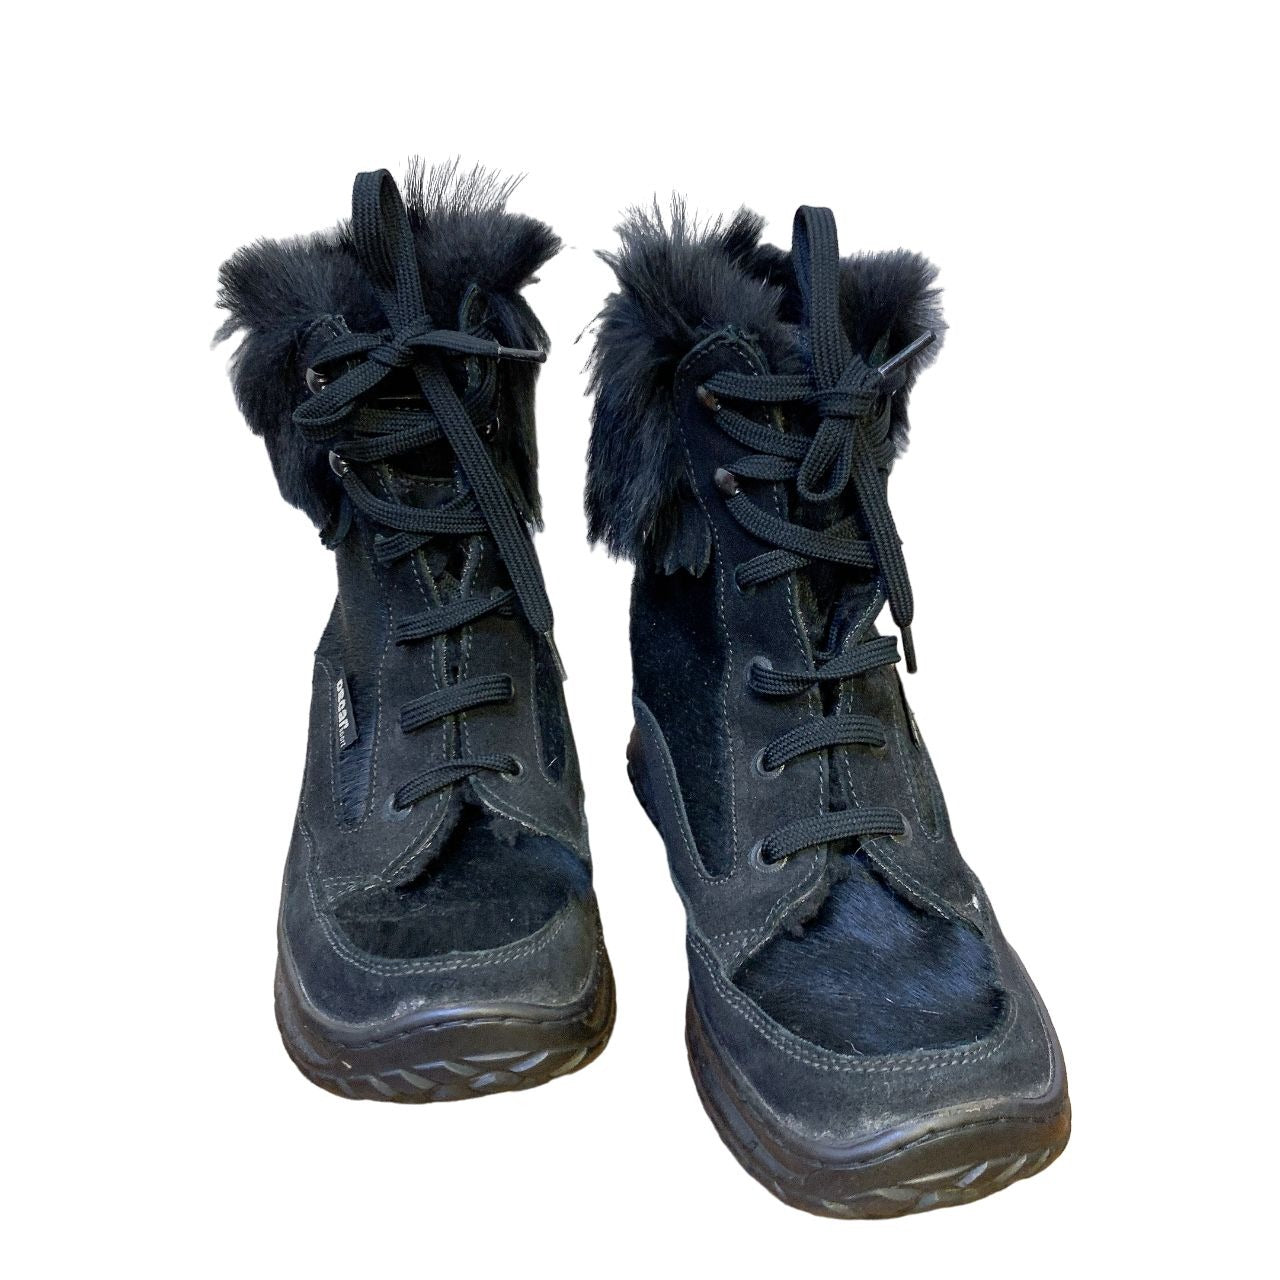 *Oscar Sport Black Lace Up Boots Size 9/40